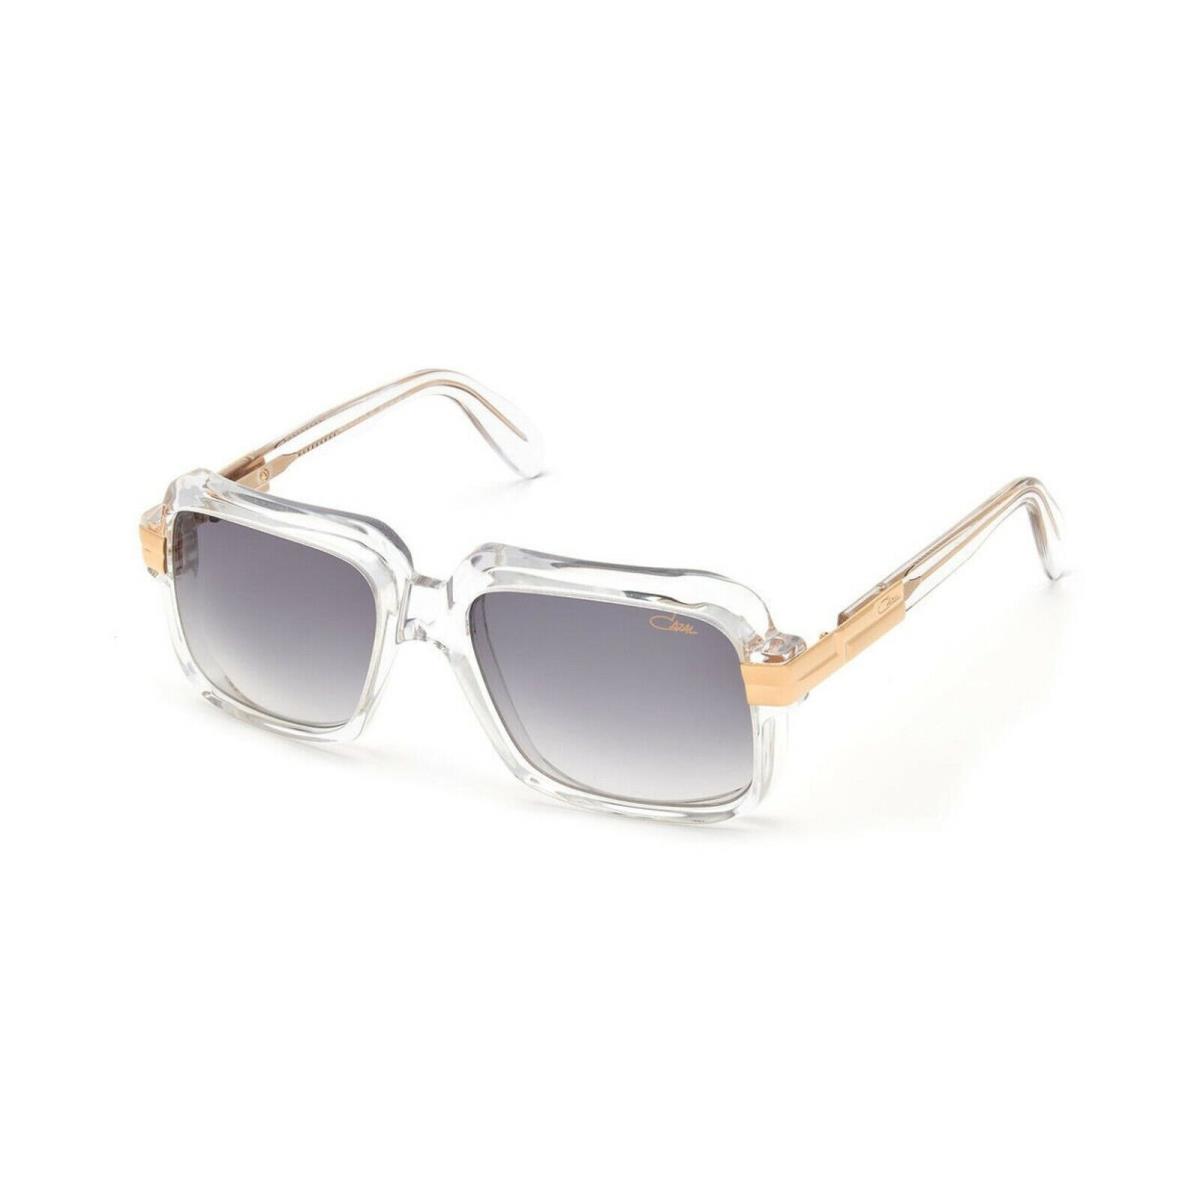 Cazal Legends 607/3 Crystal 18KT Gold/grey Shaded 065 Sunglasses - Frame: Crystal 18KT Gold, Lens: Grey Shaded